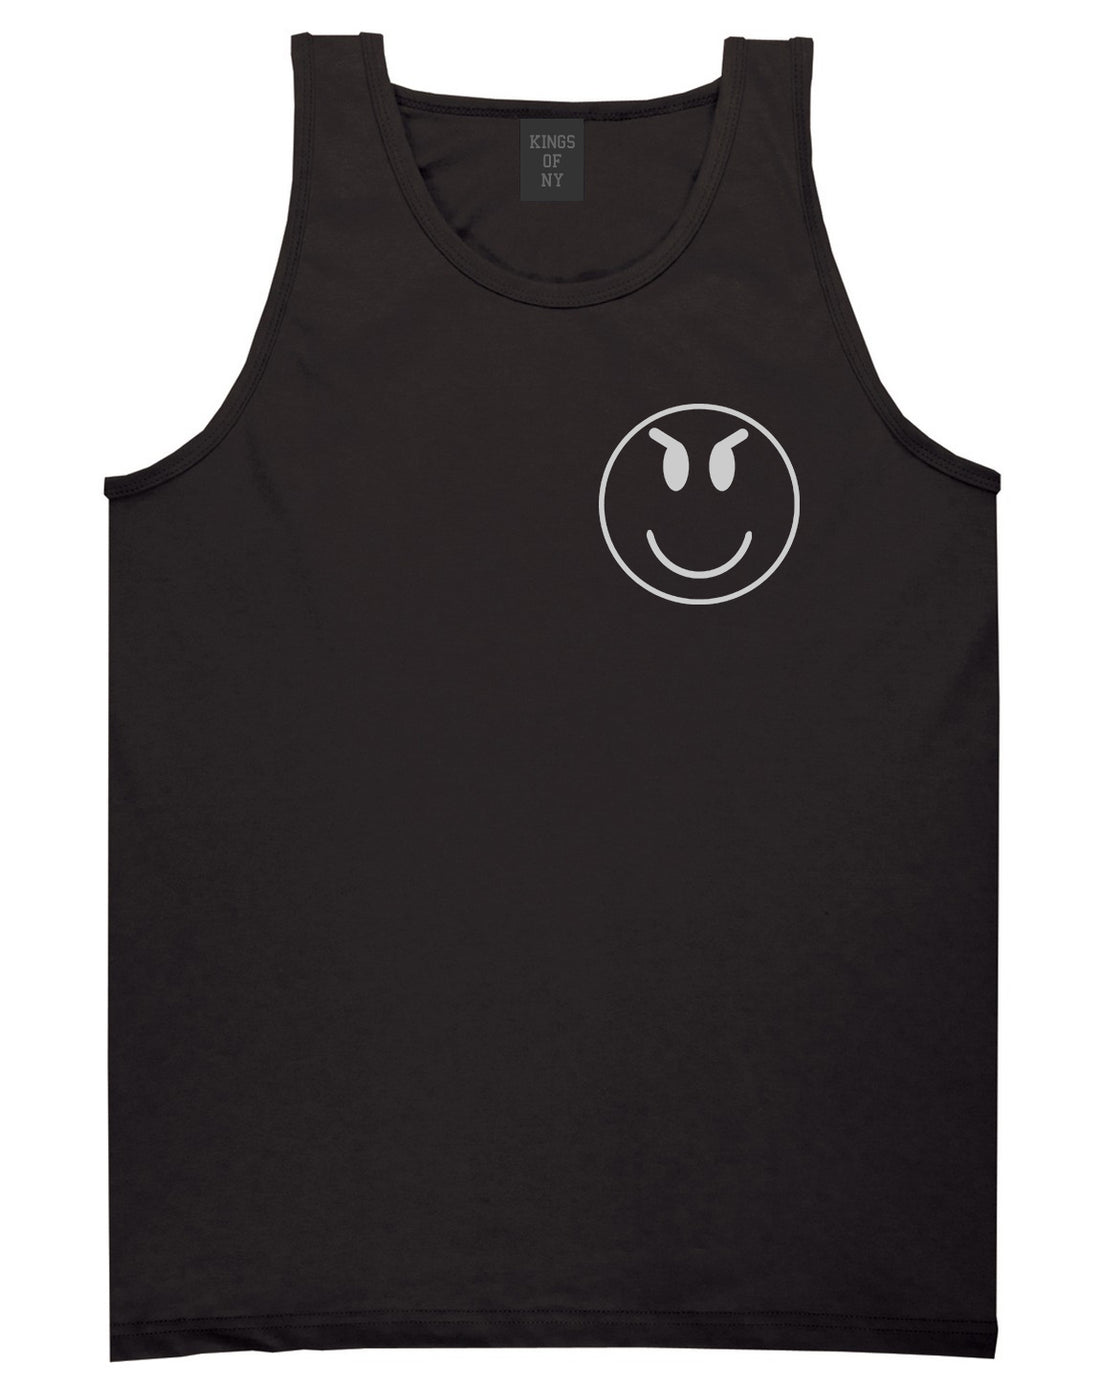 Evil Face Emoji Chest Mens Black Tank Top Shirt by KINGS OF NY